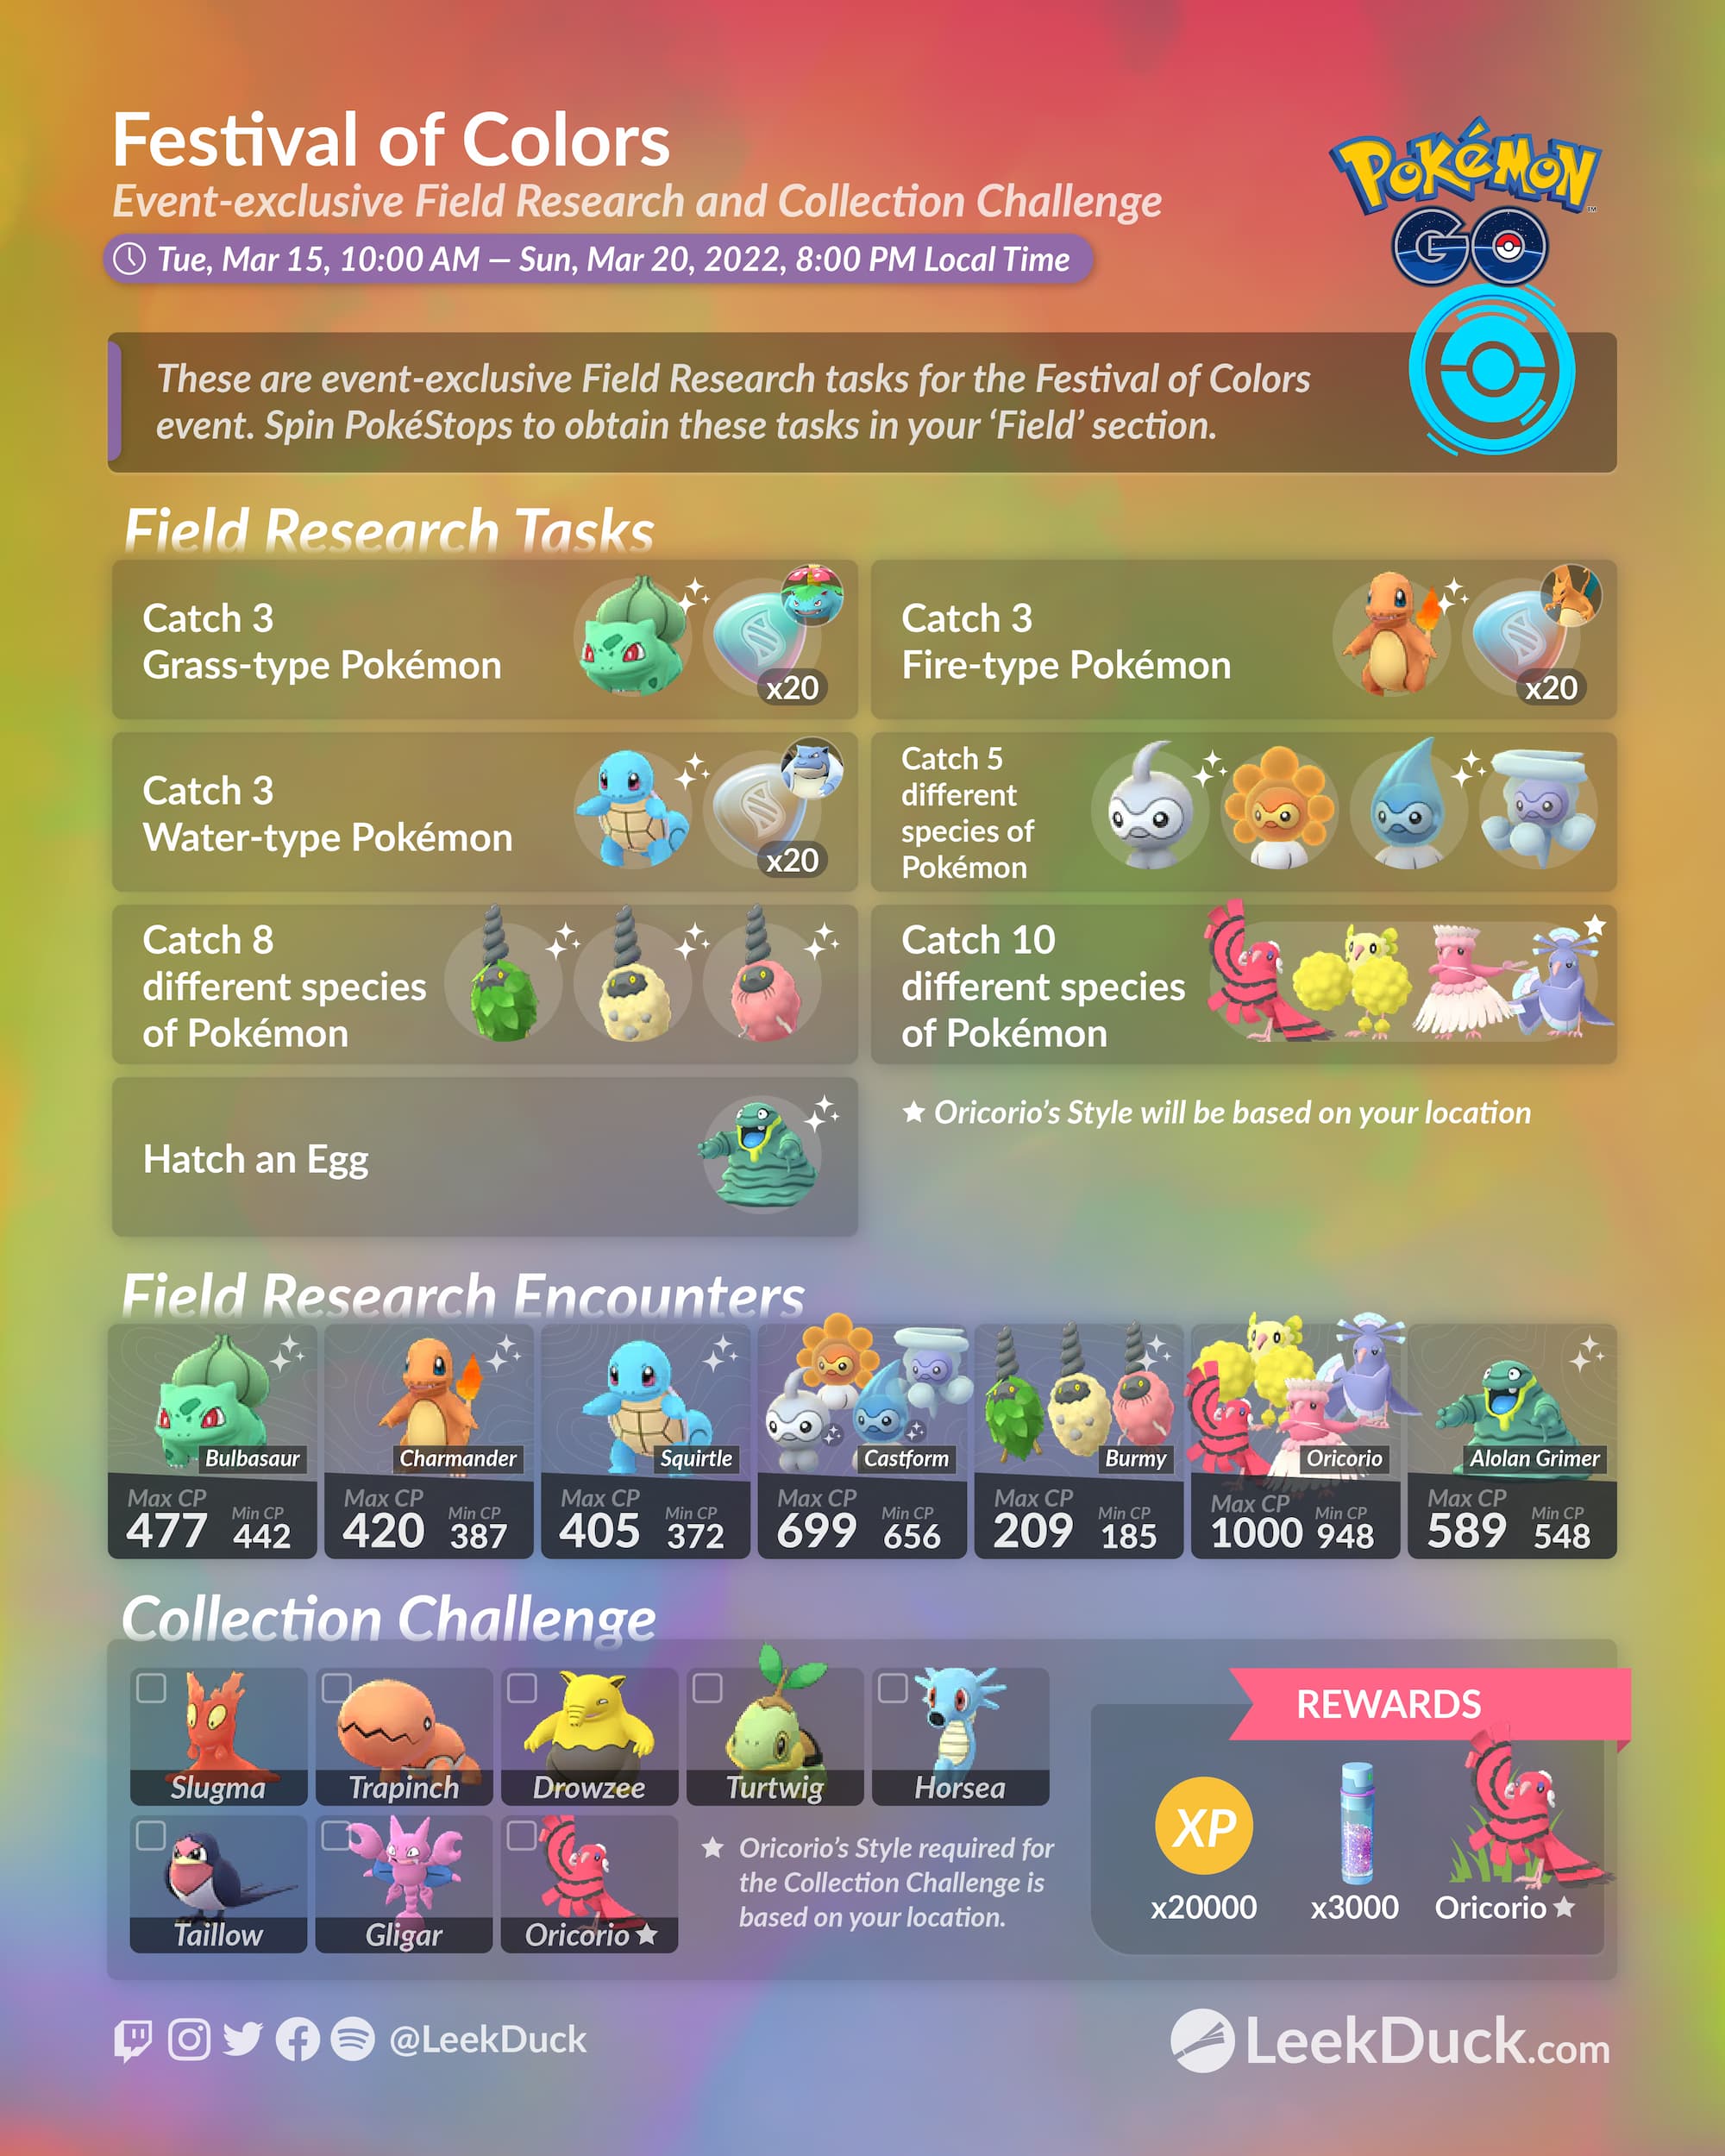 Festival of Colors Leek Duck Pokémon GO News and Resources